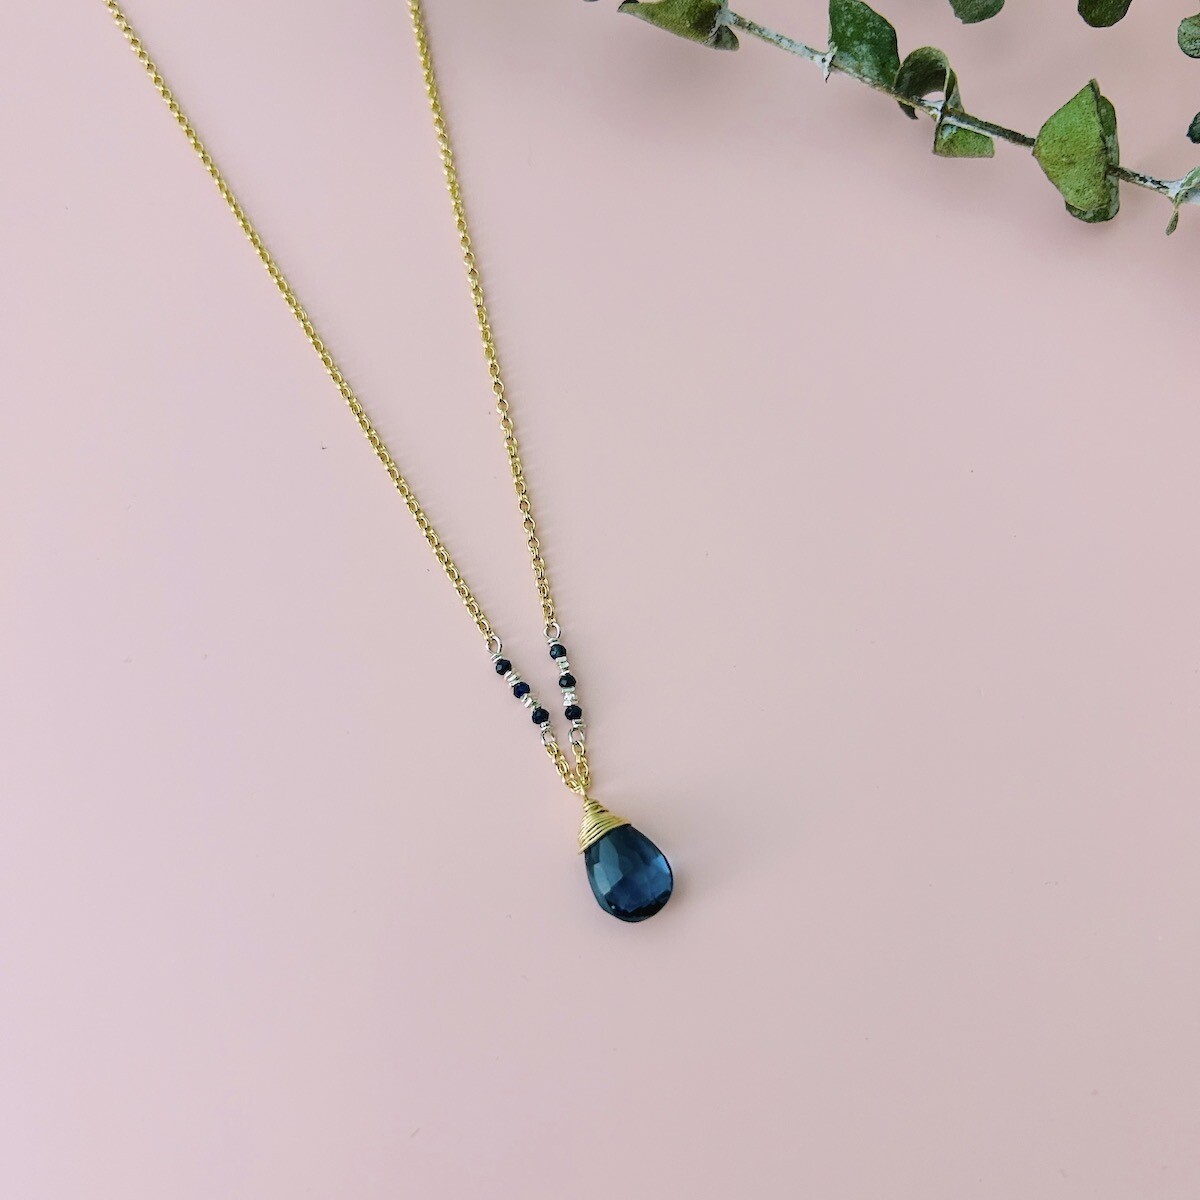 Handmade 14k GF Necklace with London Blue Topaz